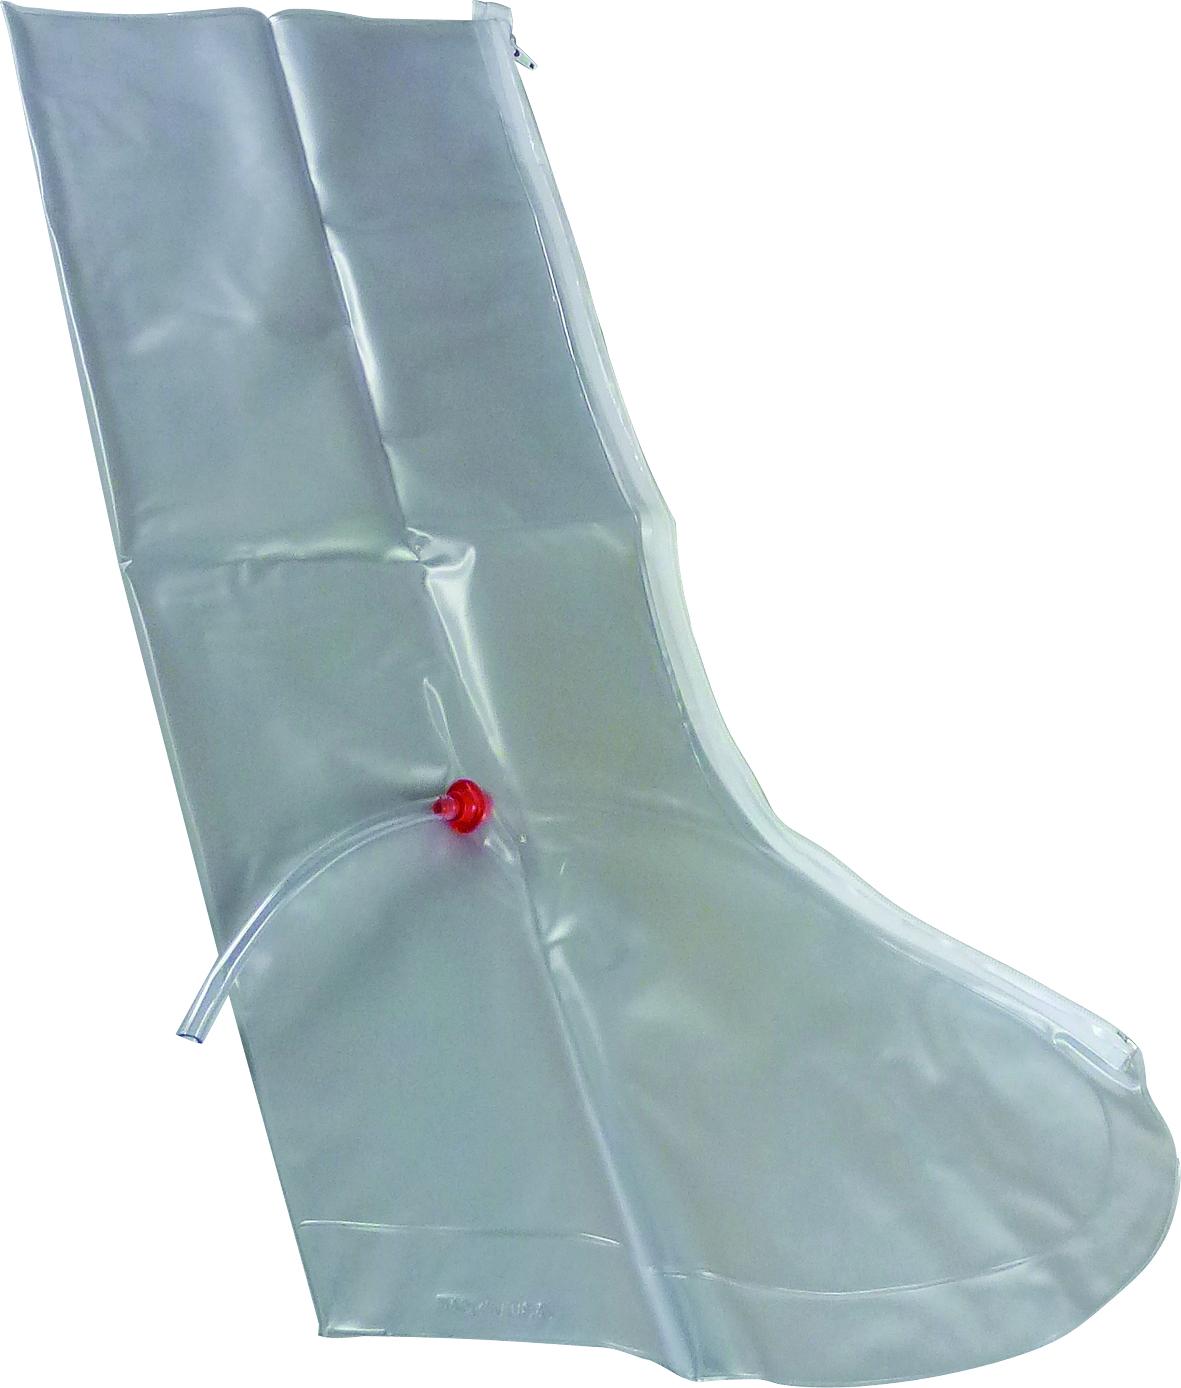 Inflatable Splints | Aid Training